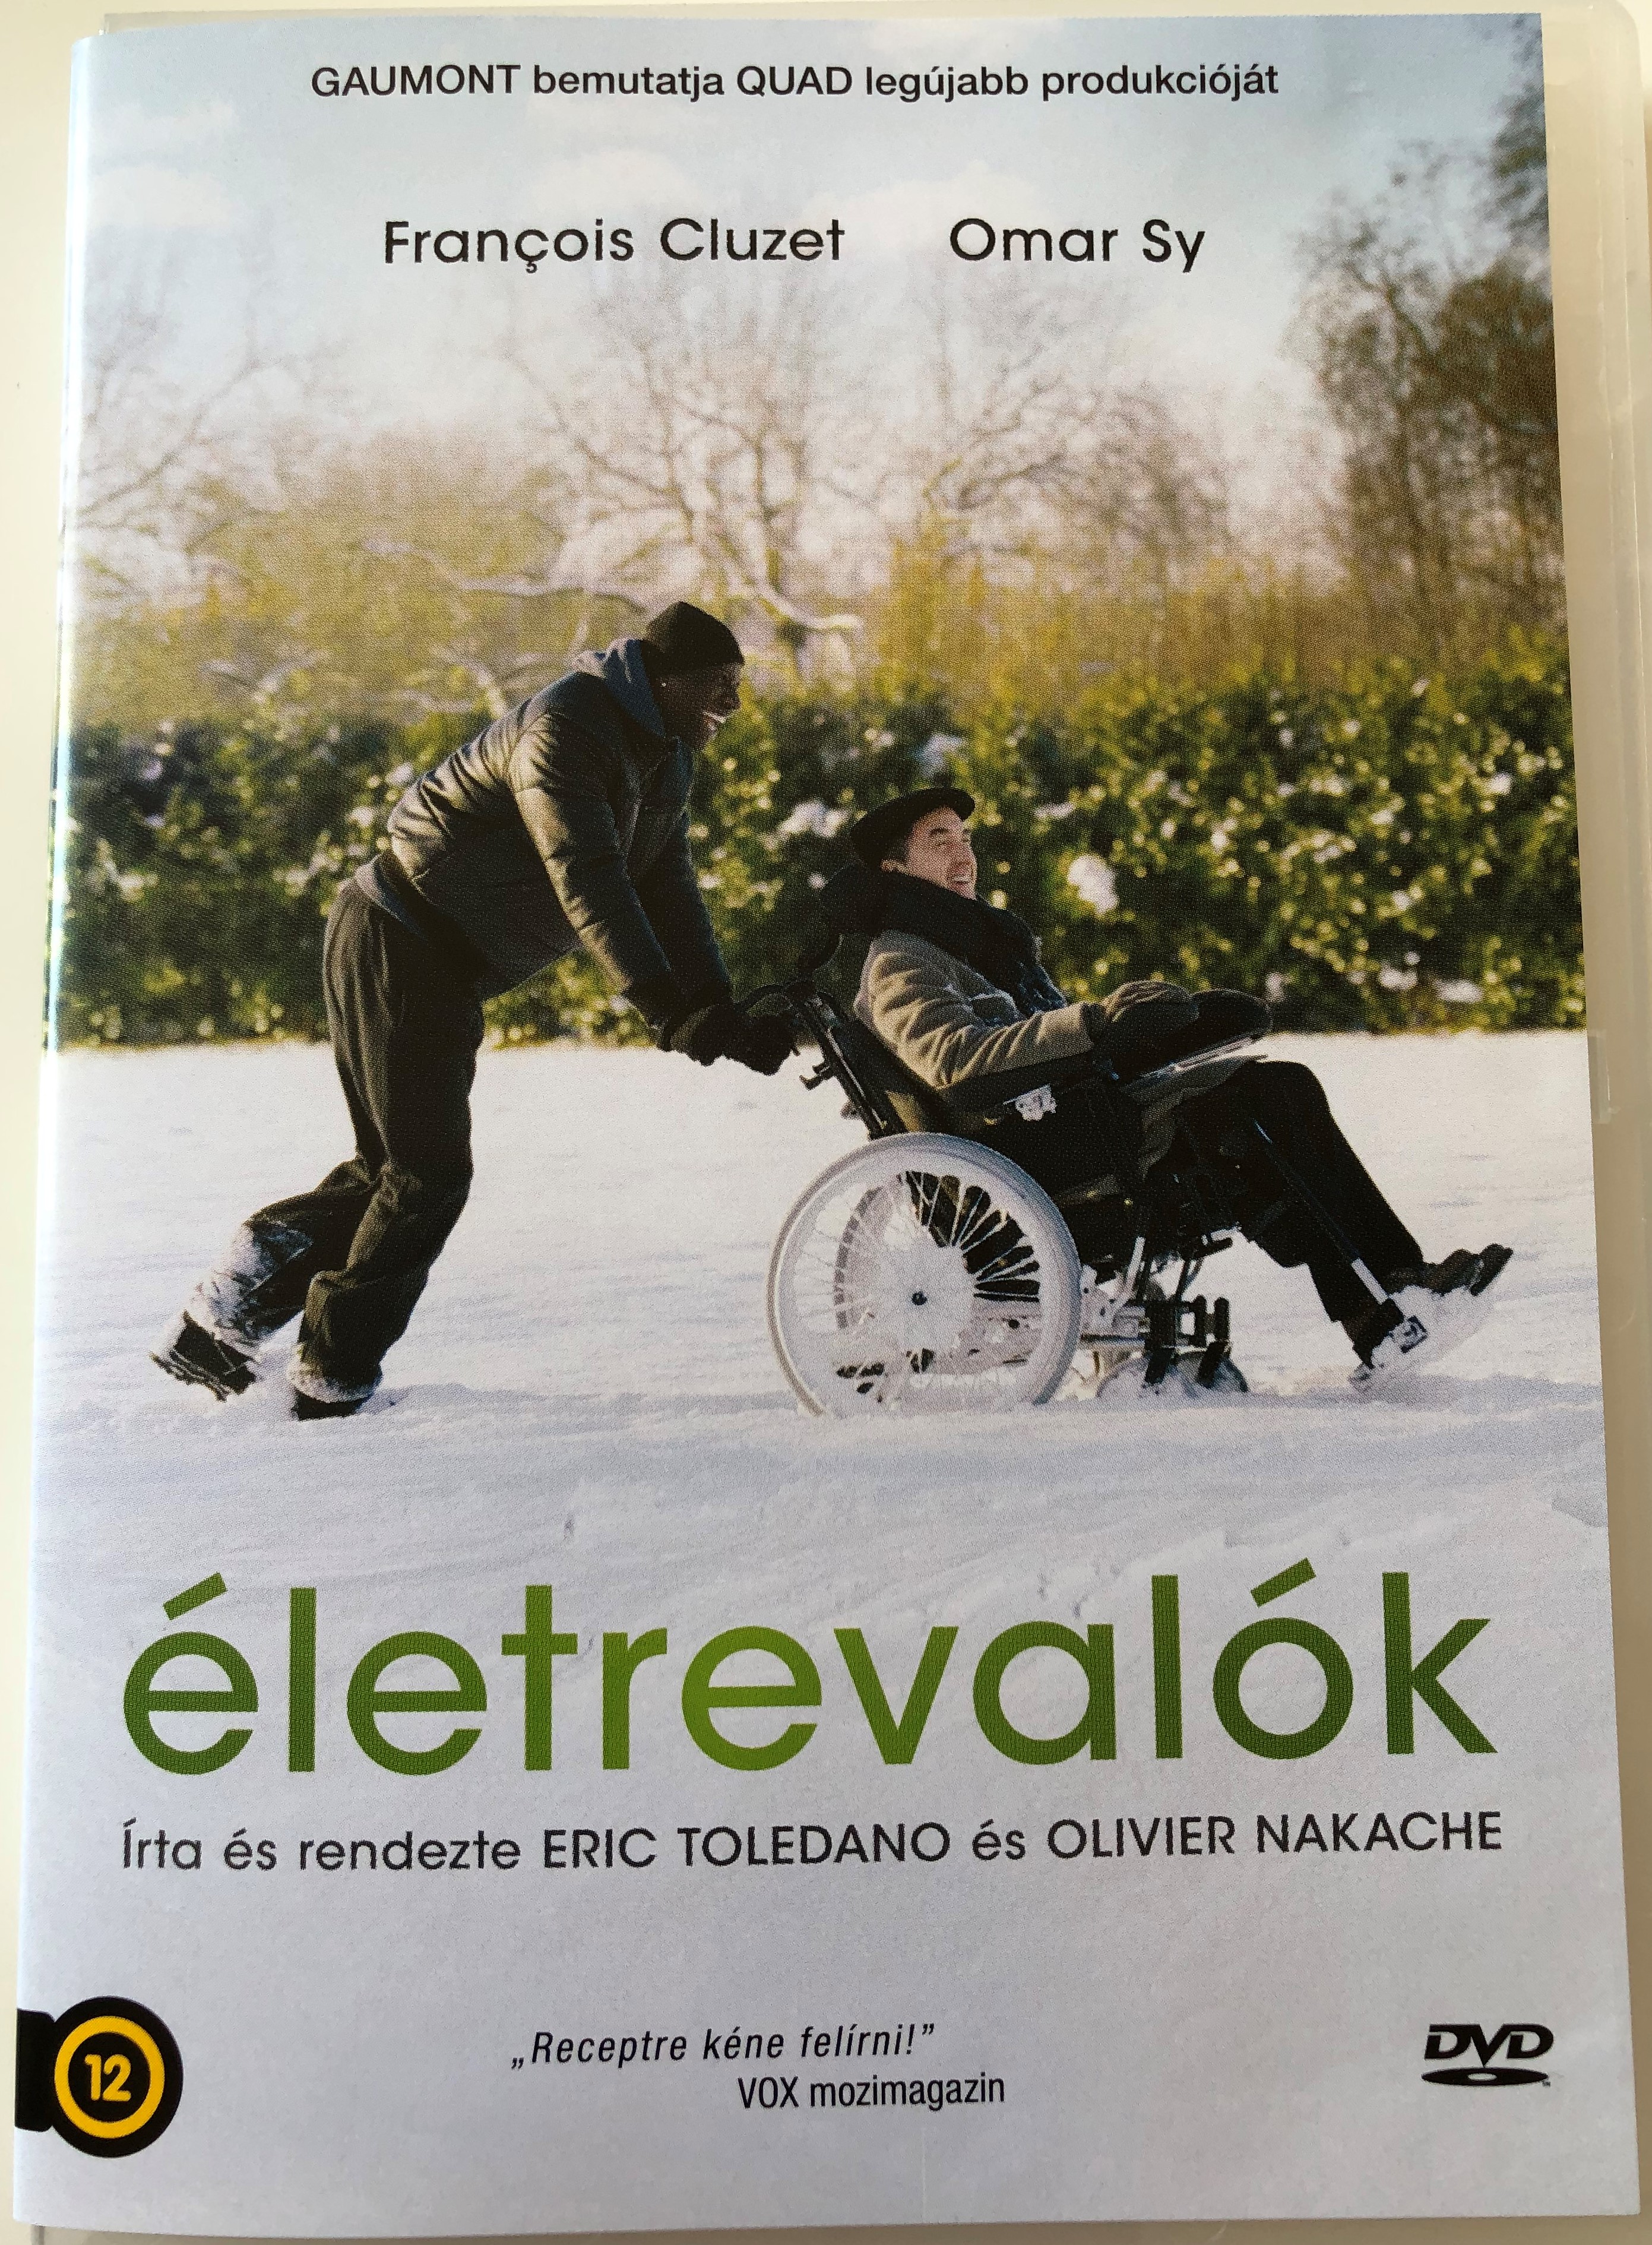 Intouchables DVD 2011 Életrevalók / Directed by Olivier Nakace, Éric  Toledano / Starring: François Cluzet, Omar Sy - bibleinmylanguage